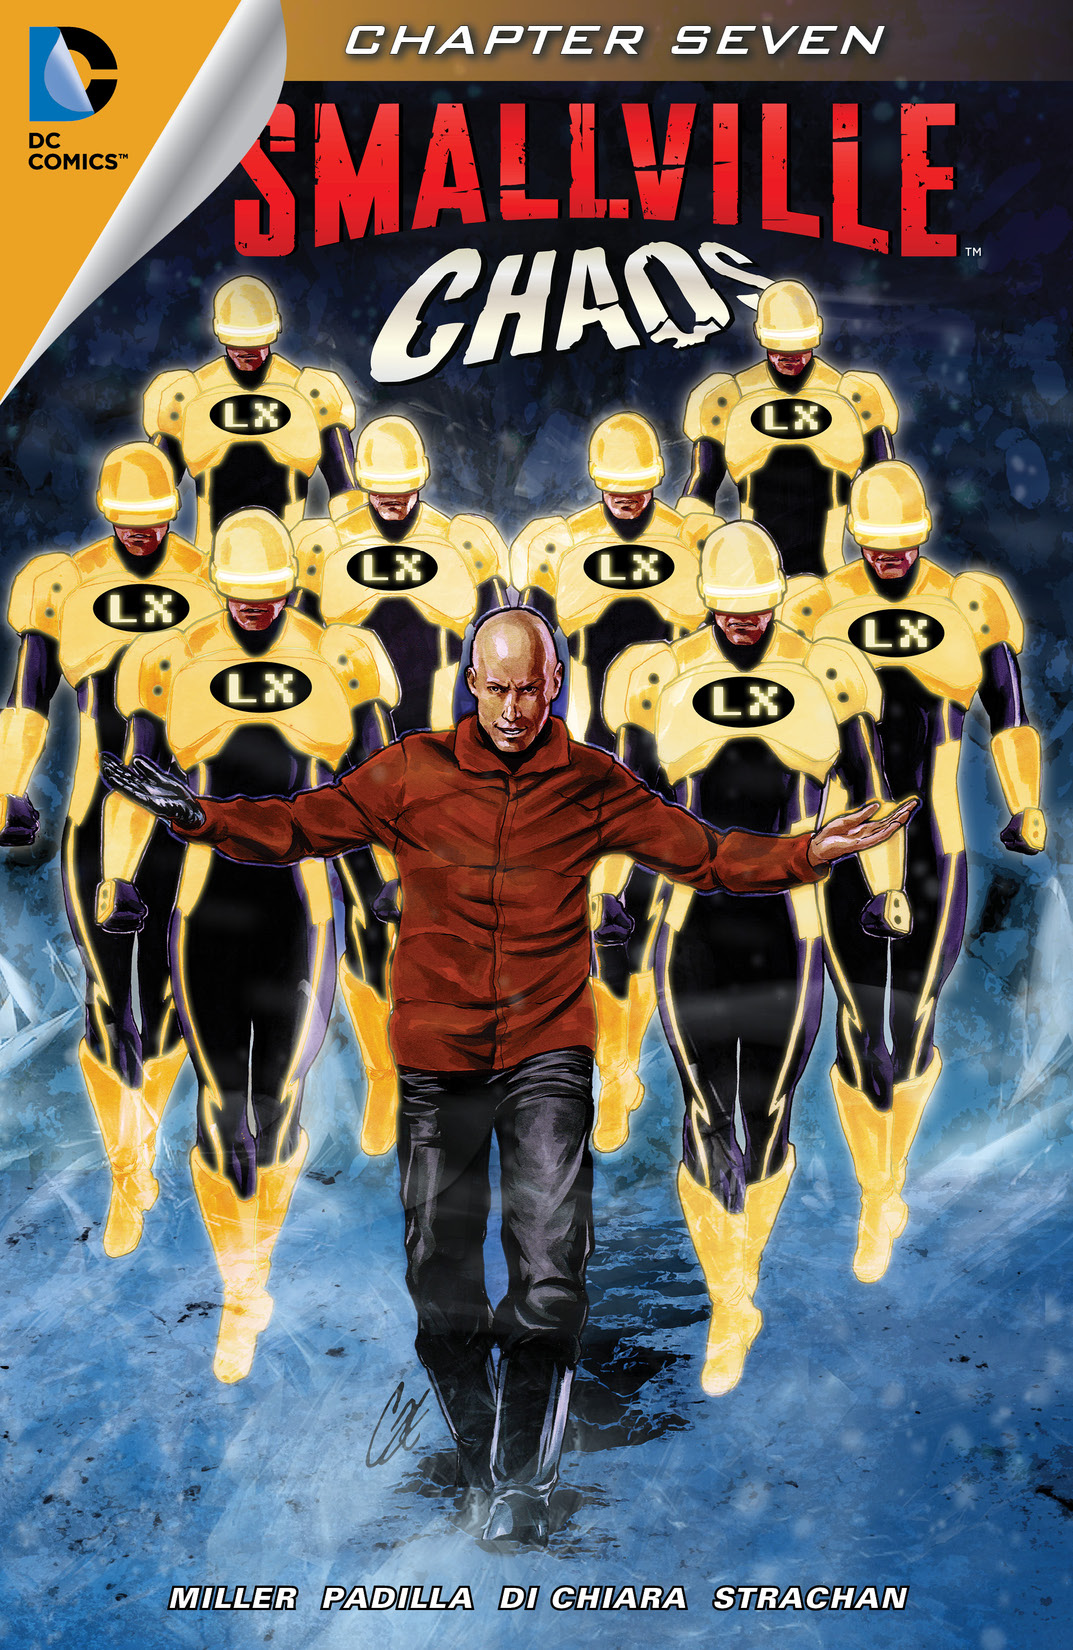 Smallville Season 11: Chaos #7 preview images